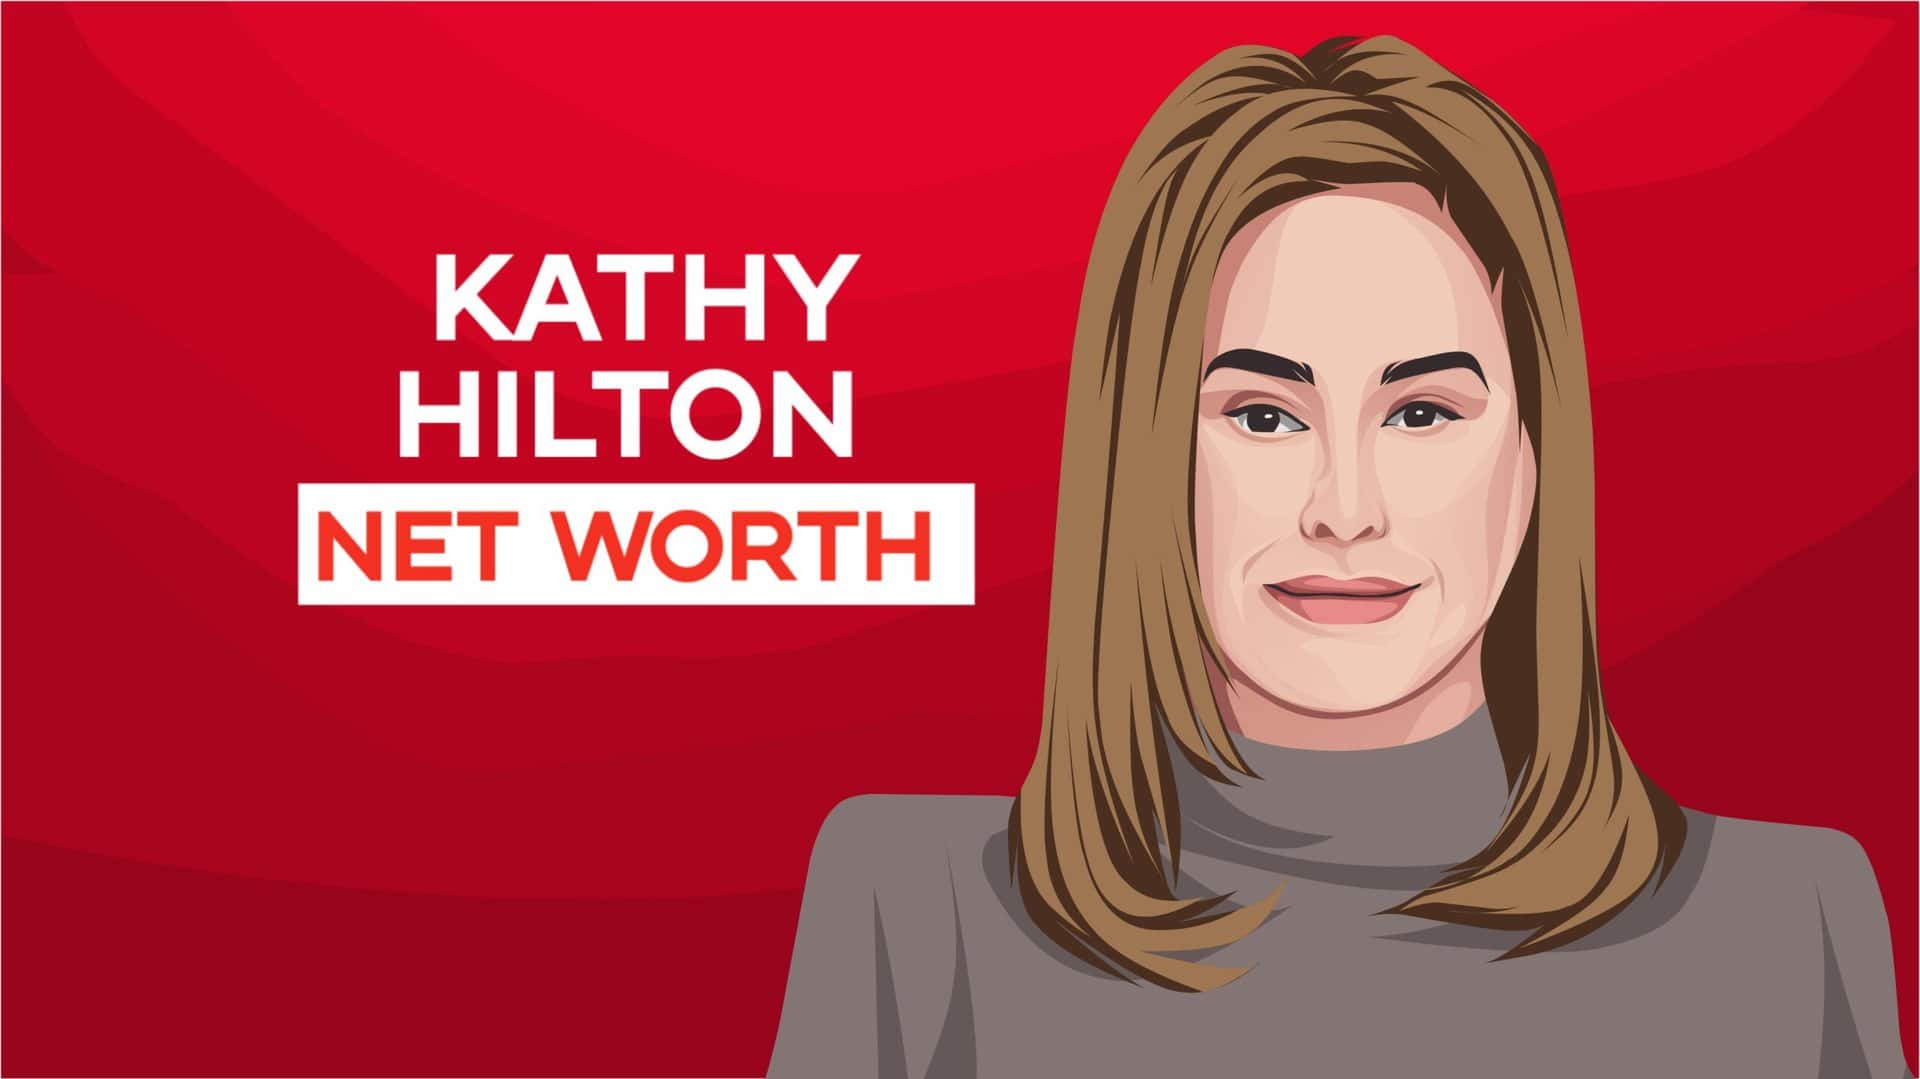 Kathy Hilton's net worth